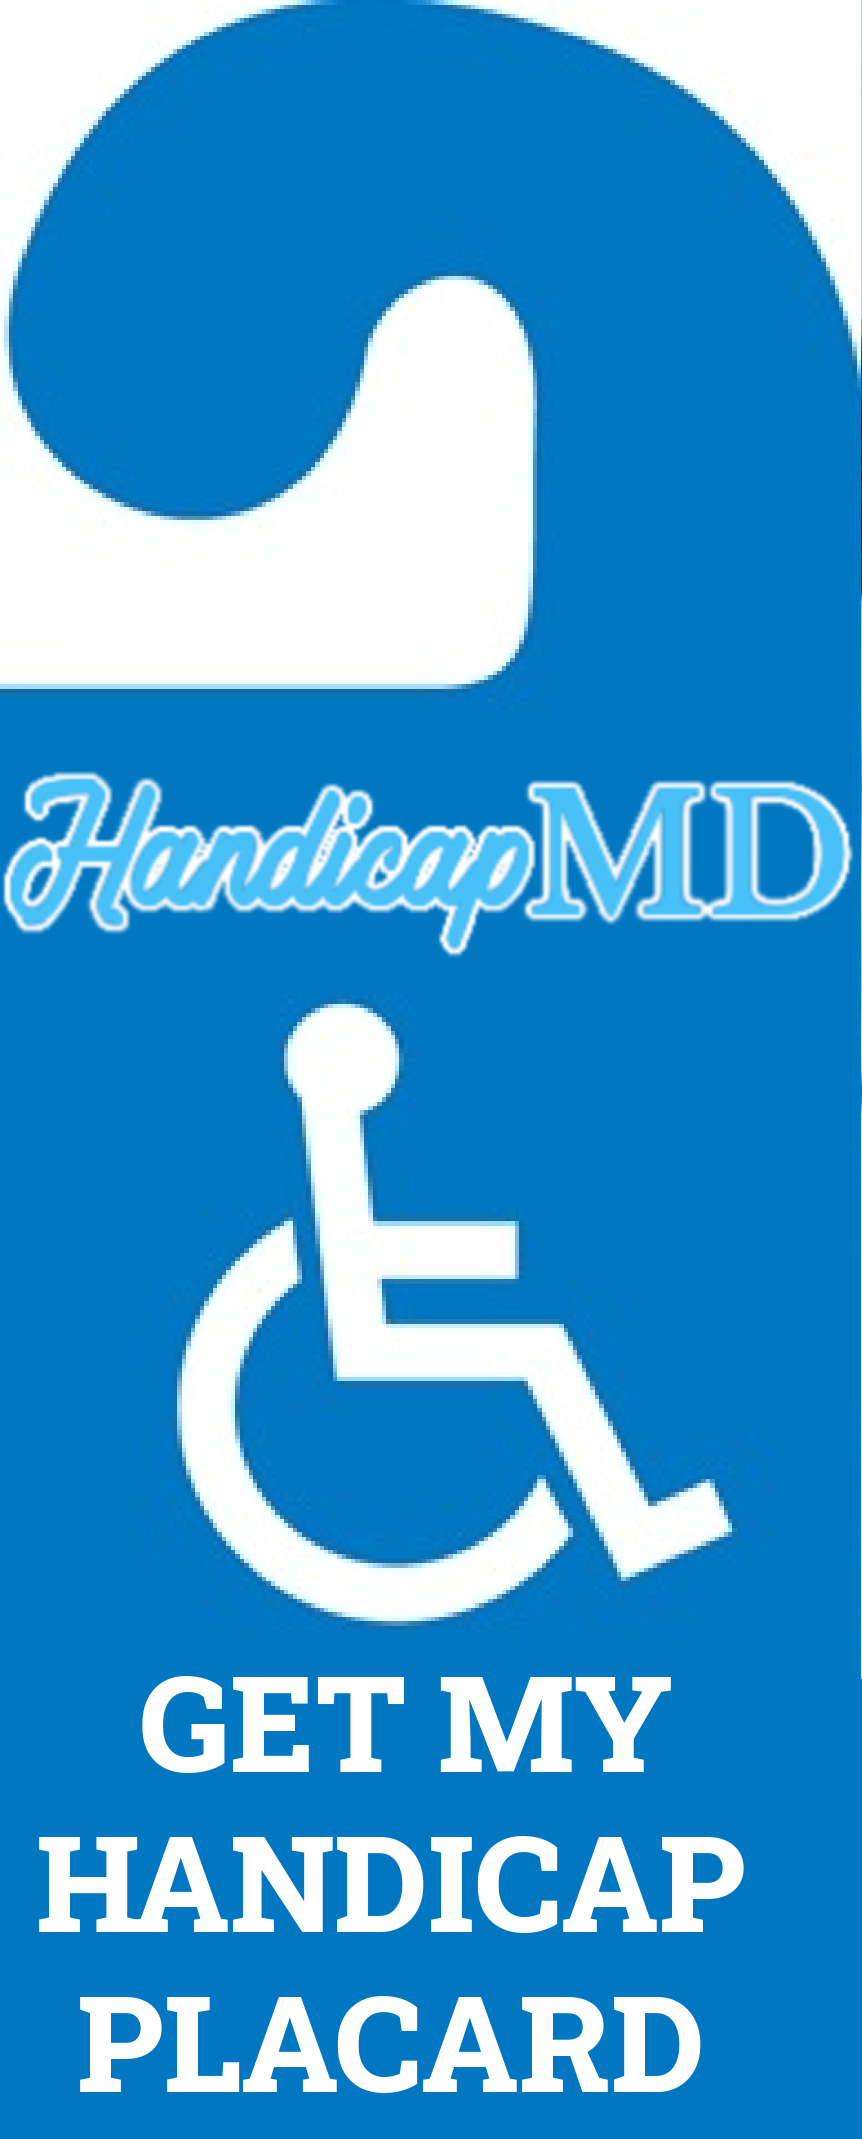 Idaho Handicap Parking Placards